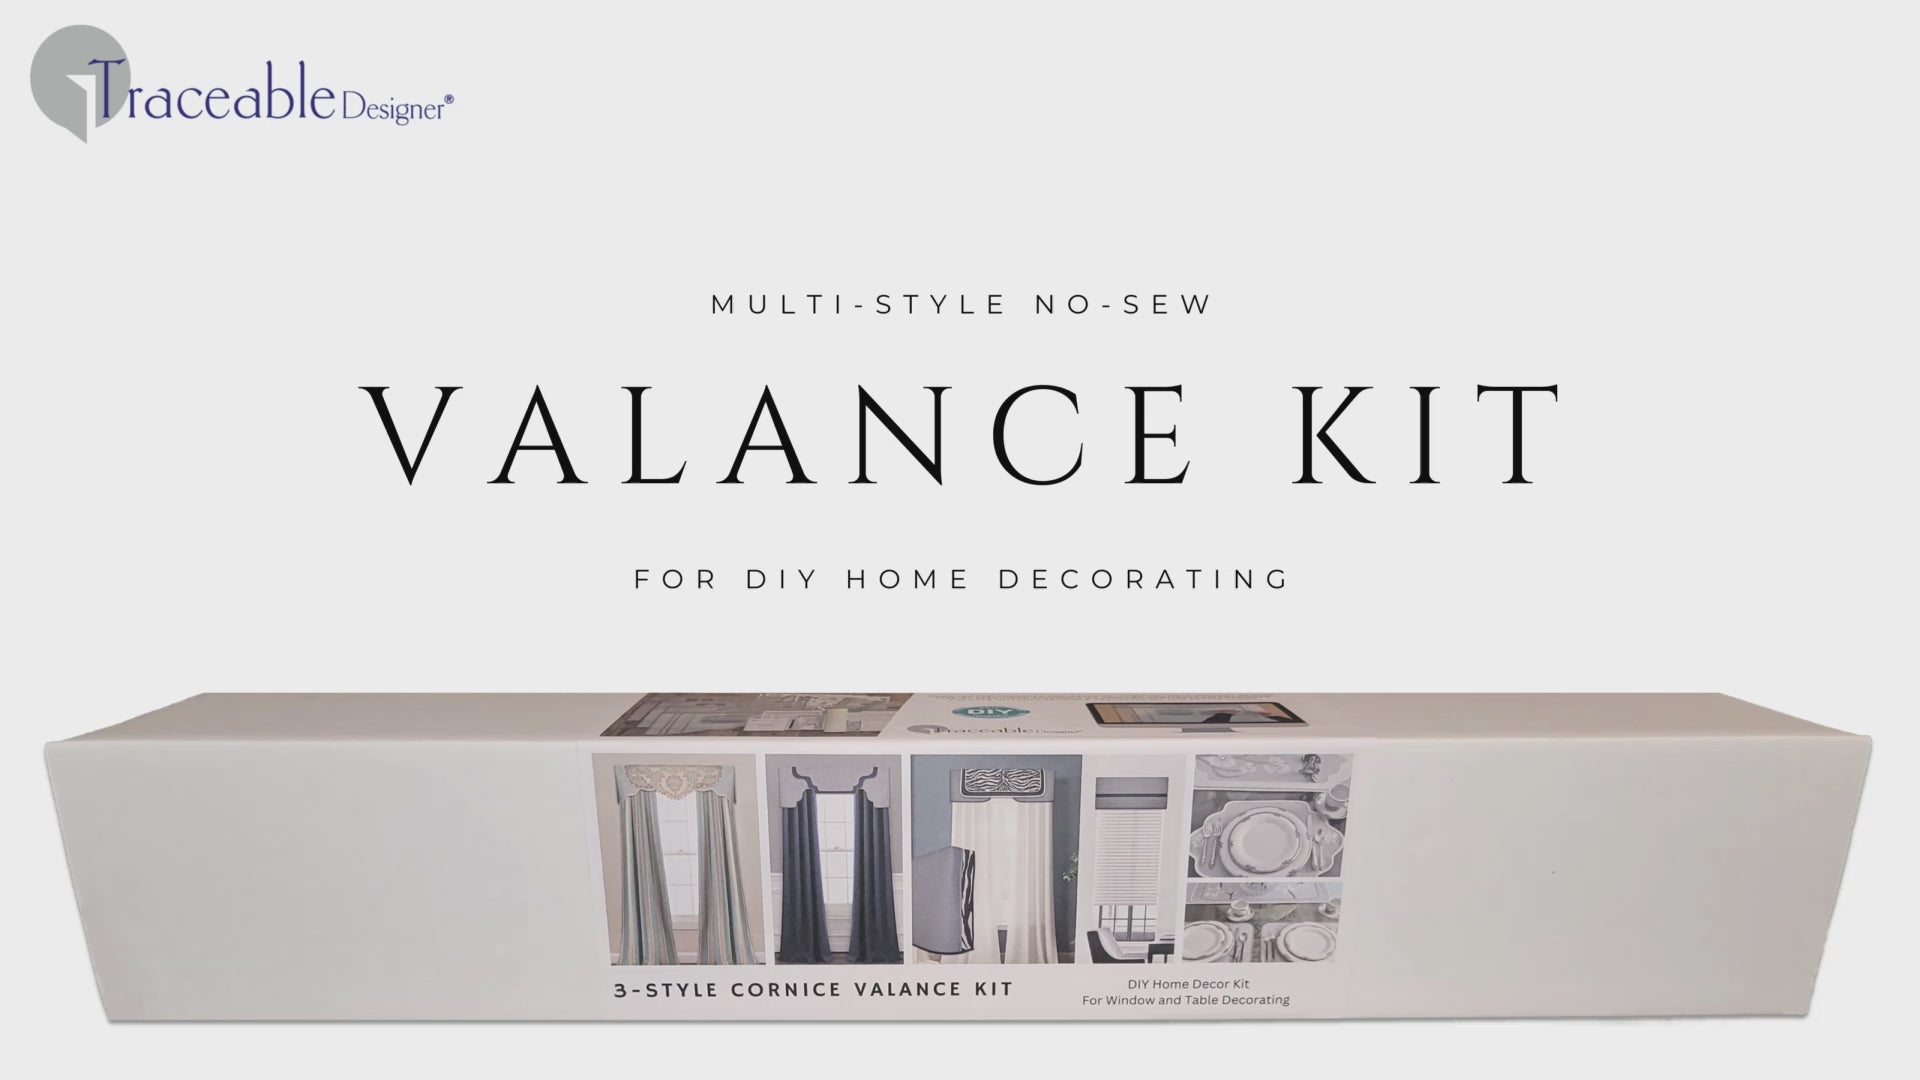 Multi-Style Cornice Valance Kit for Making Custom Valances Without Sewing